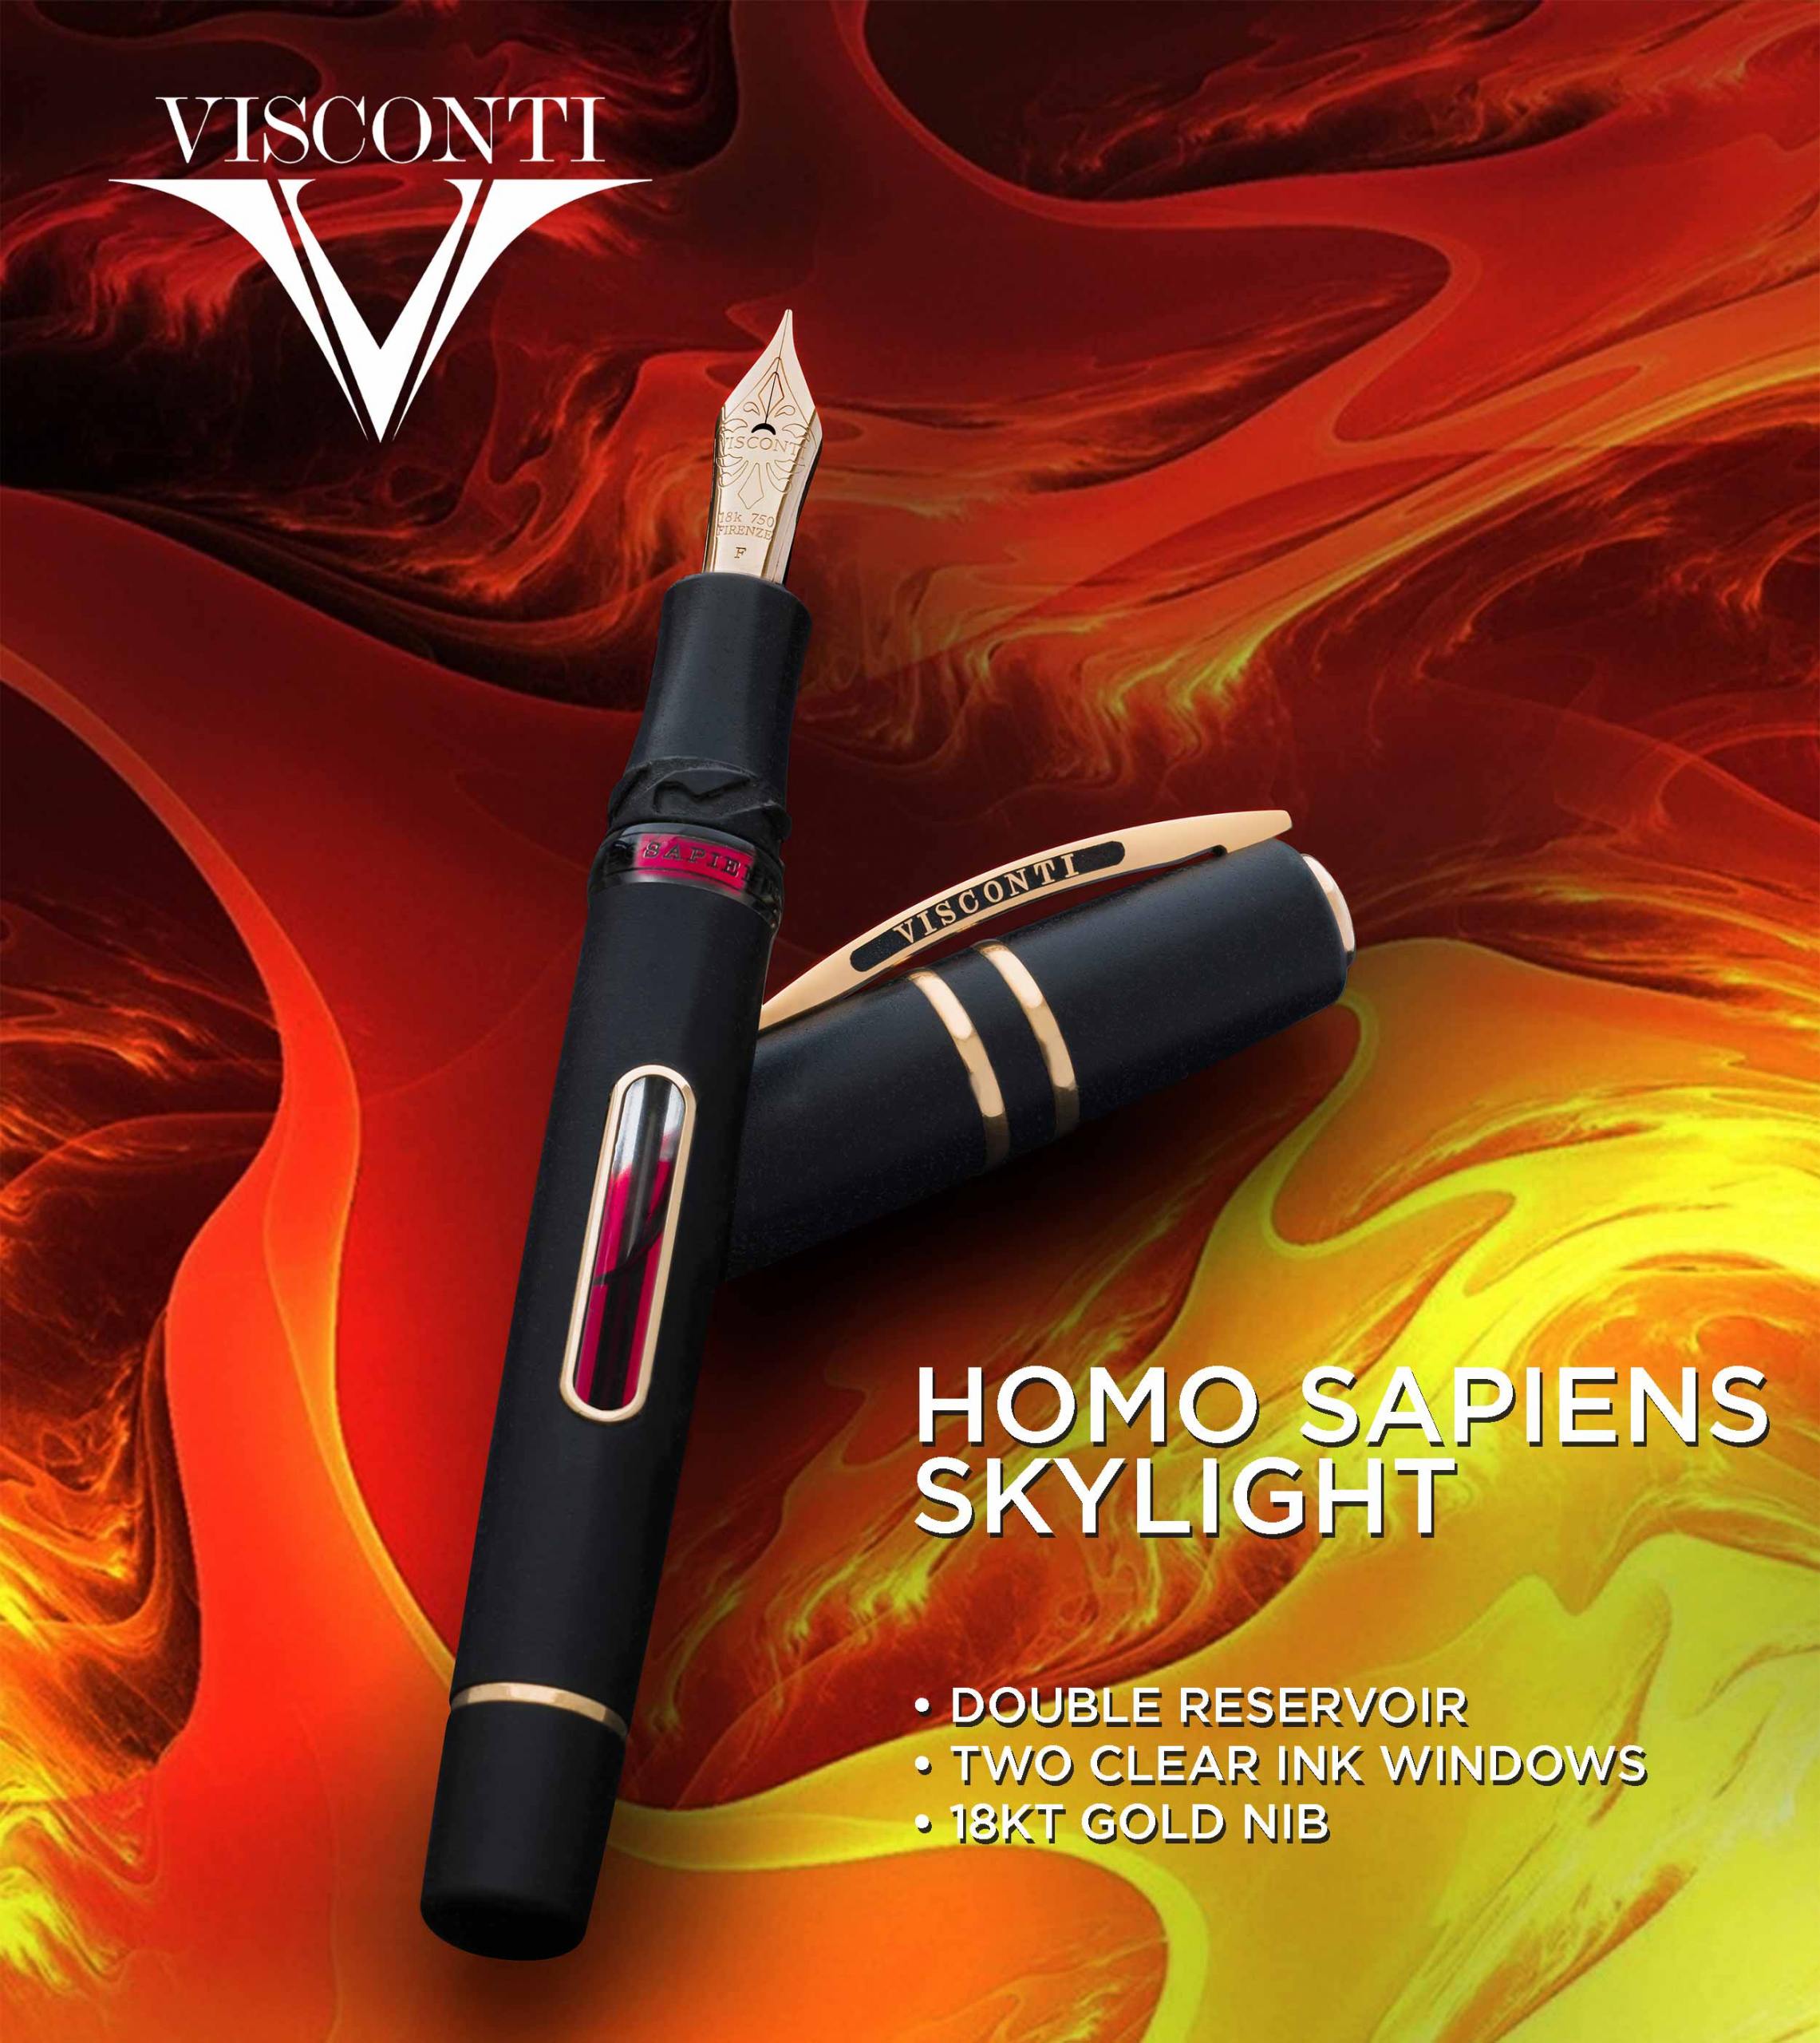 Visconti Homo Sapiens Skylight Fountain Pen.